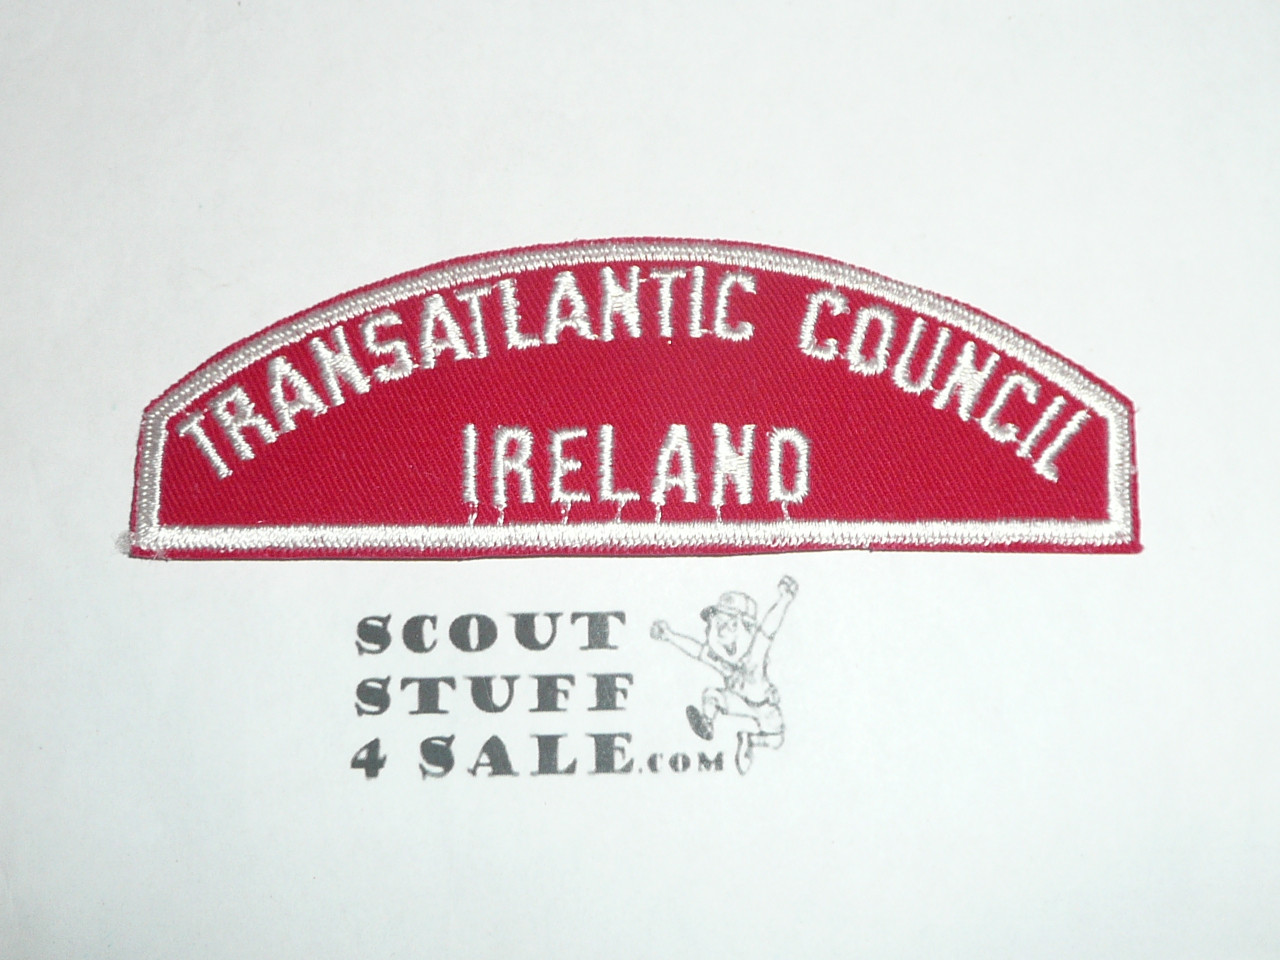 Transatlantic Council IRELAND Red/White Council Strip